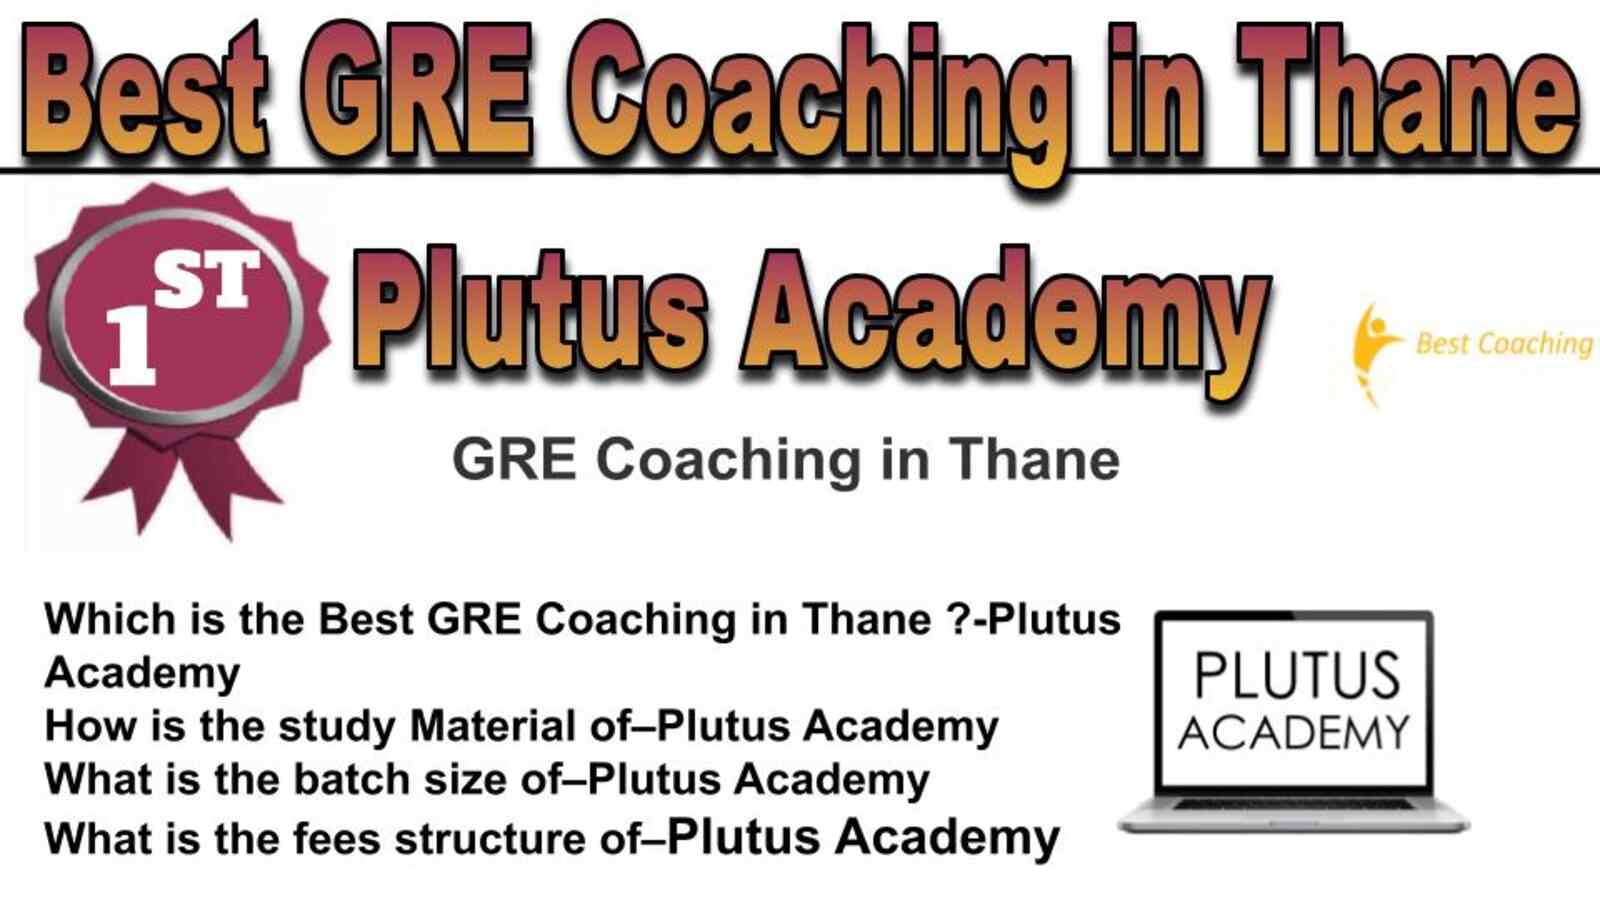 Rank 1 best GRE coaching in Thane